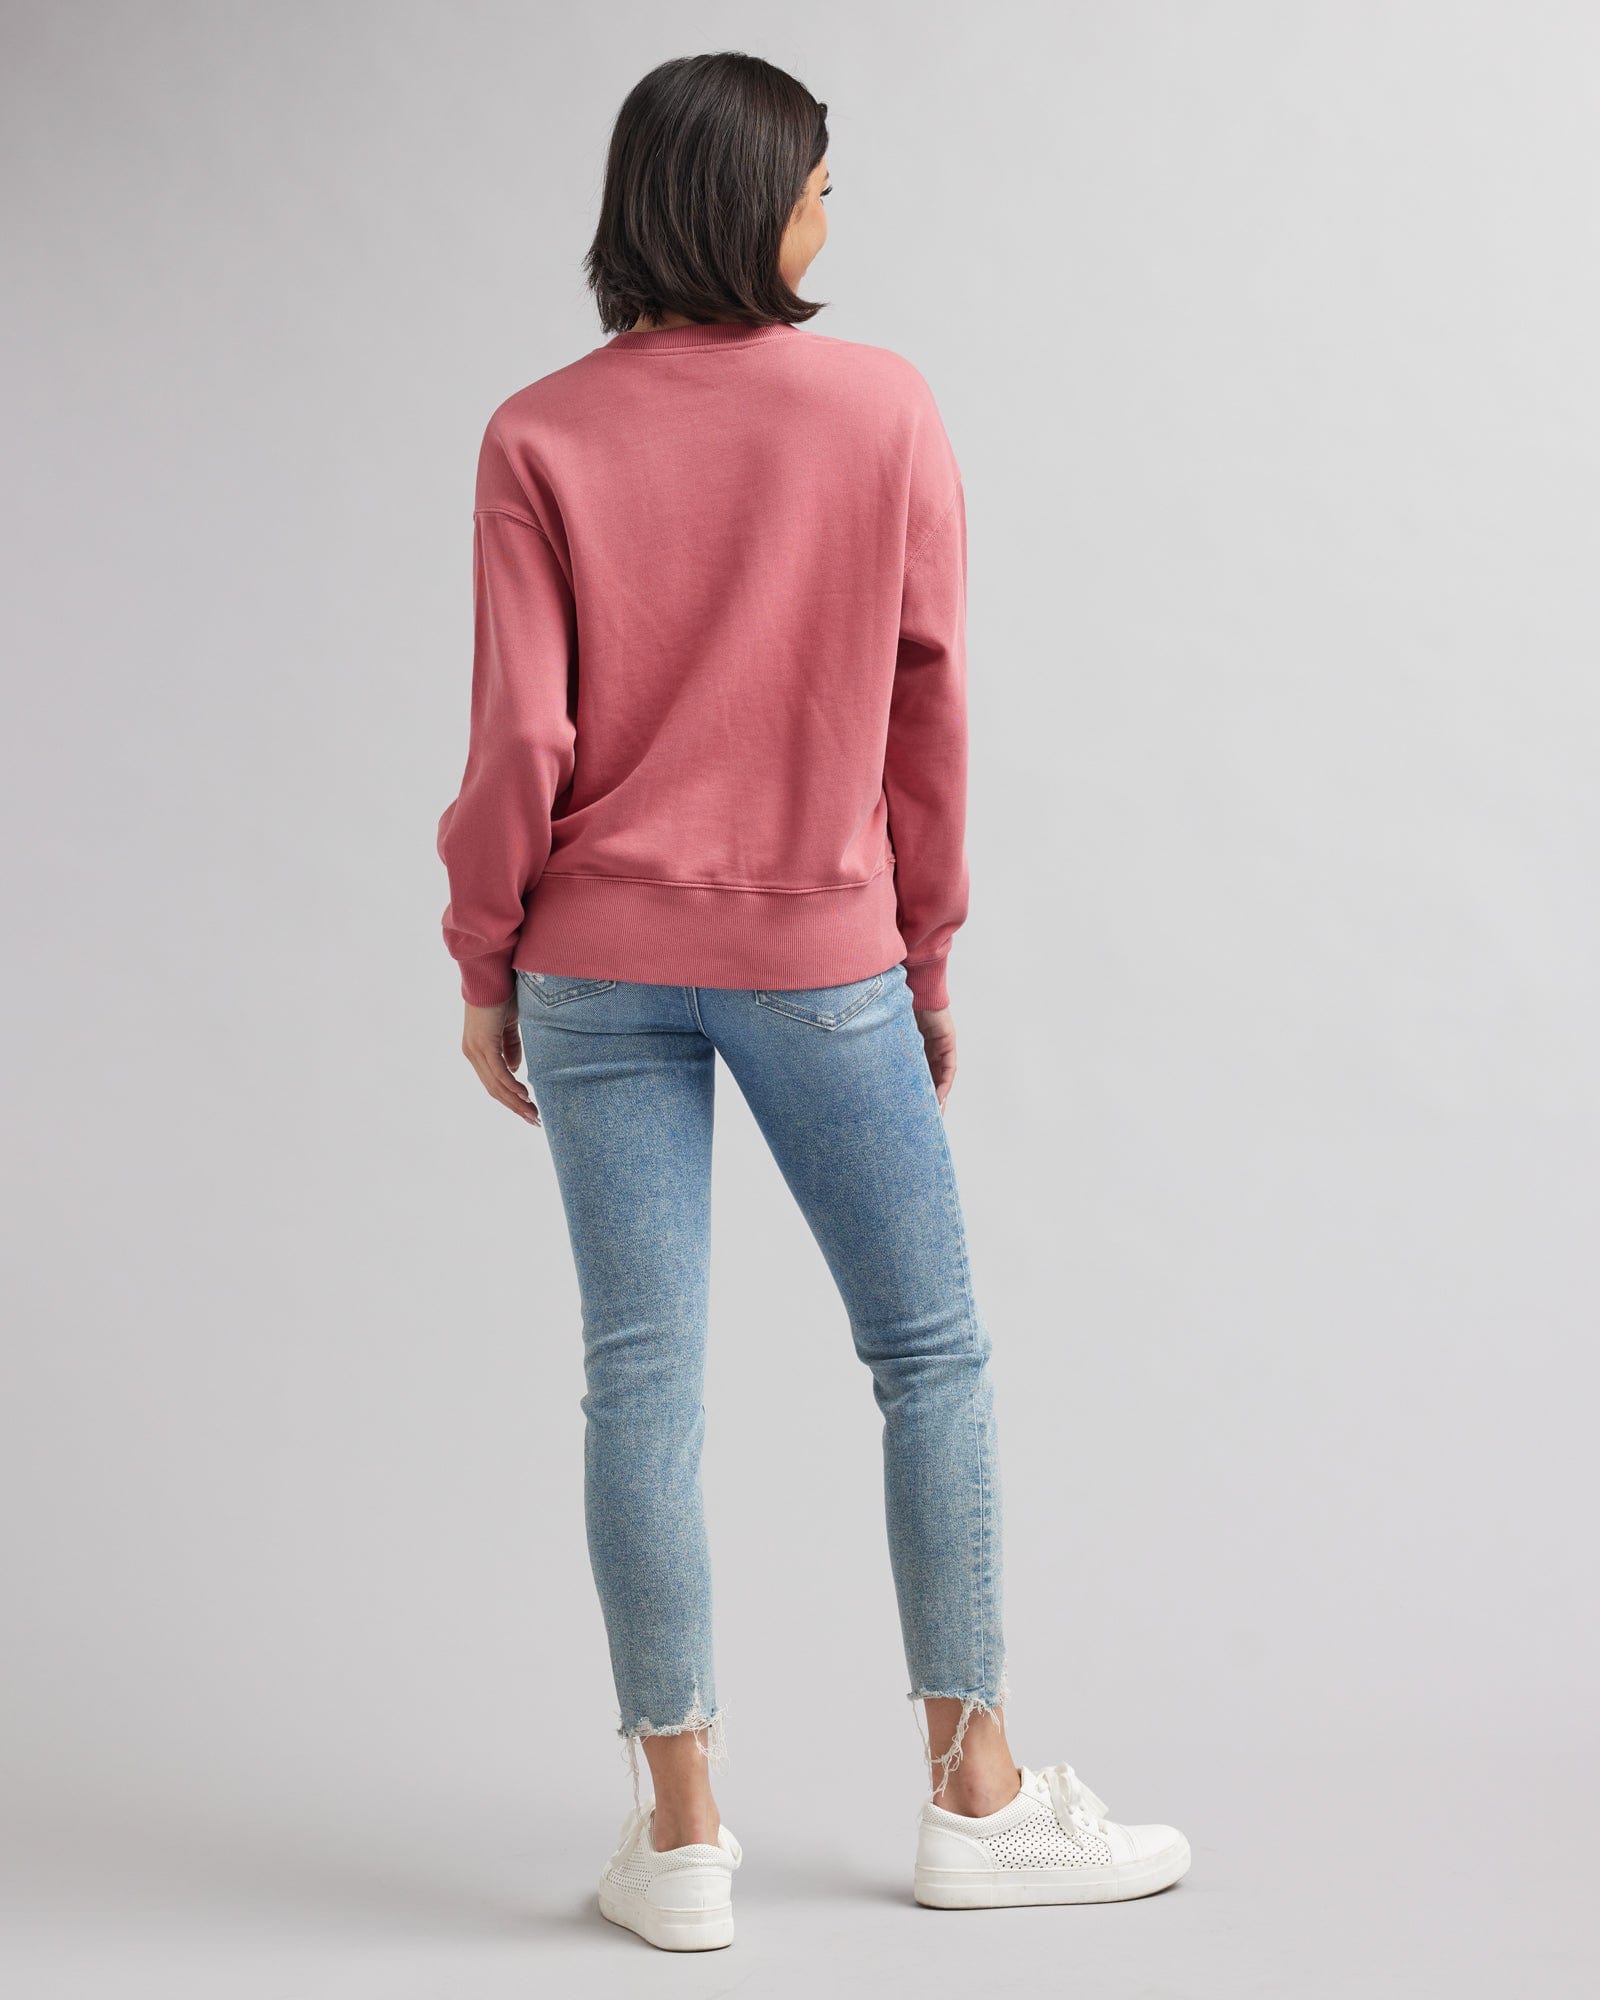 Woman in a pink, long sleeved sweatshirt